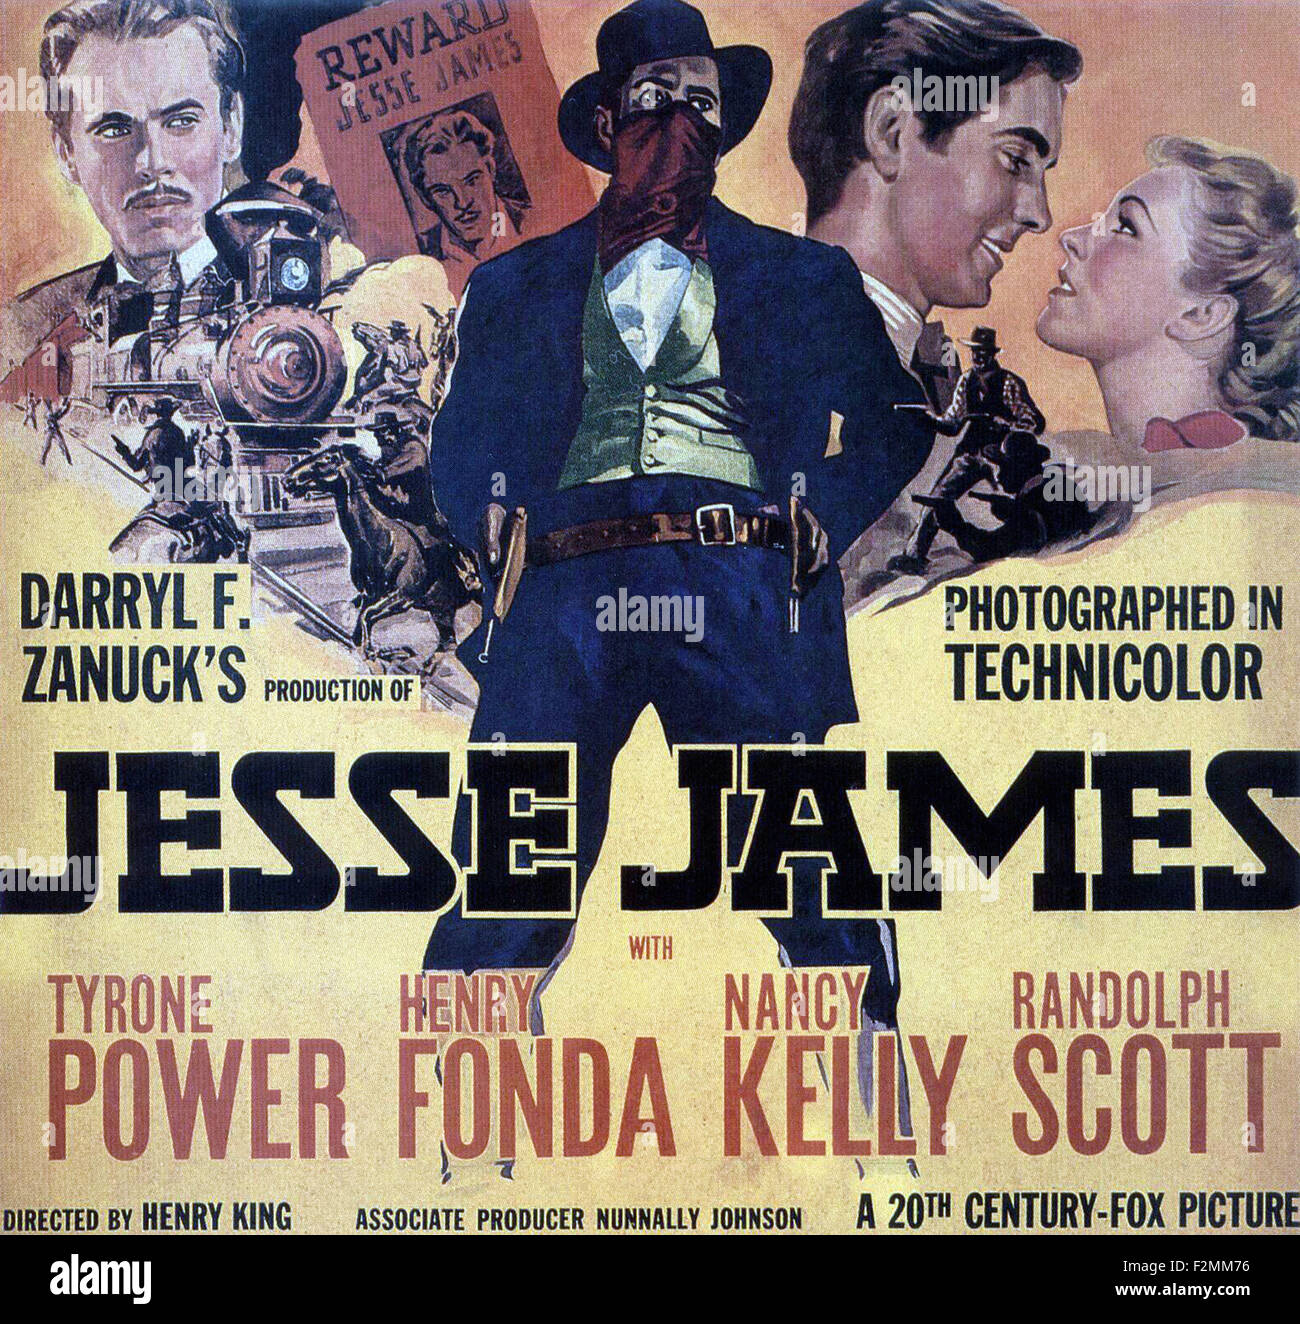 Image result for jesse james movie poster